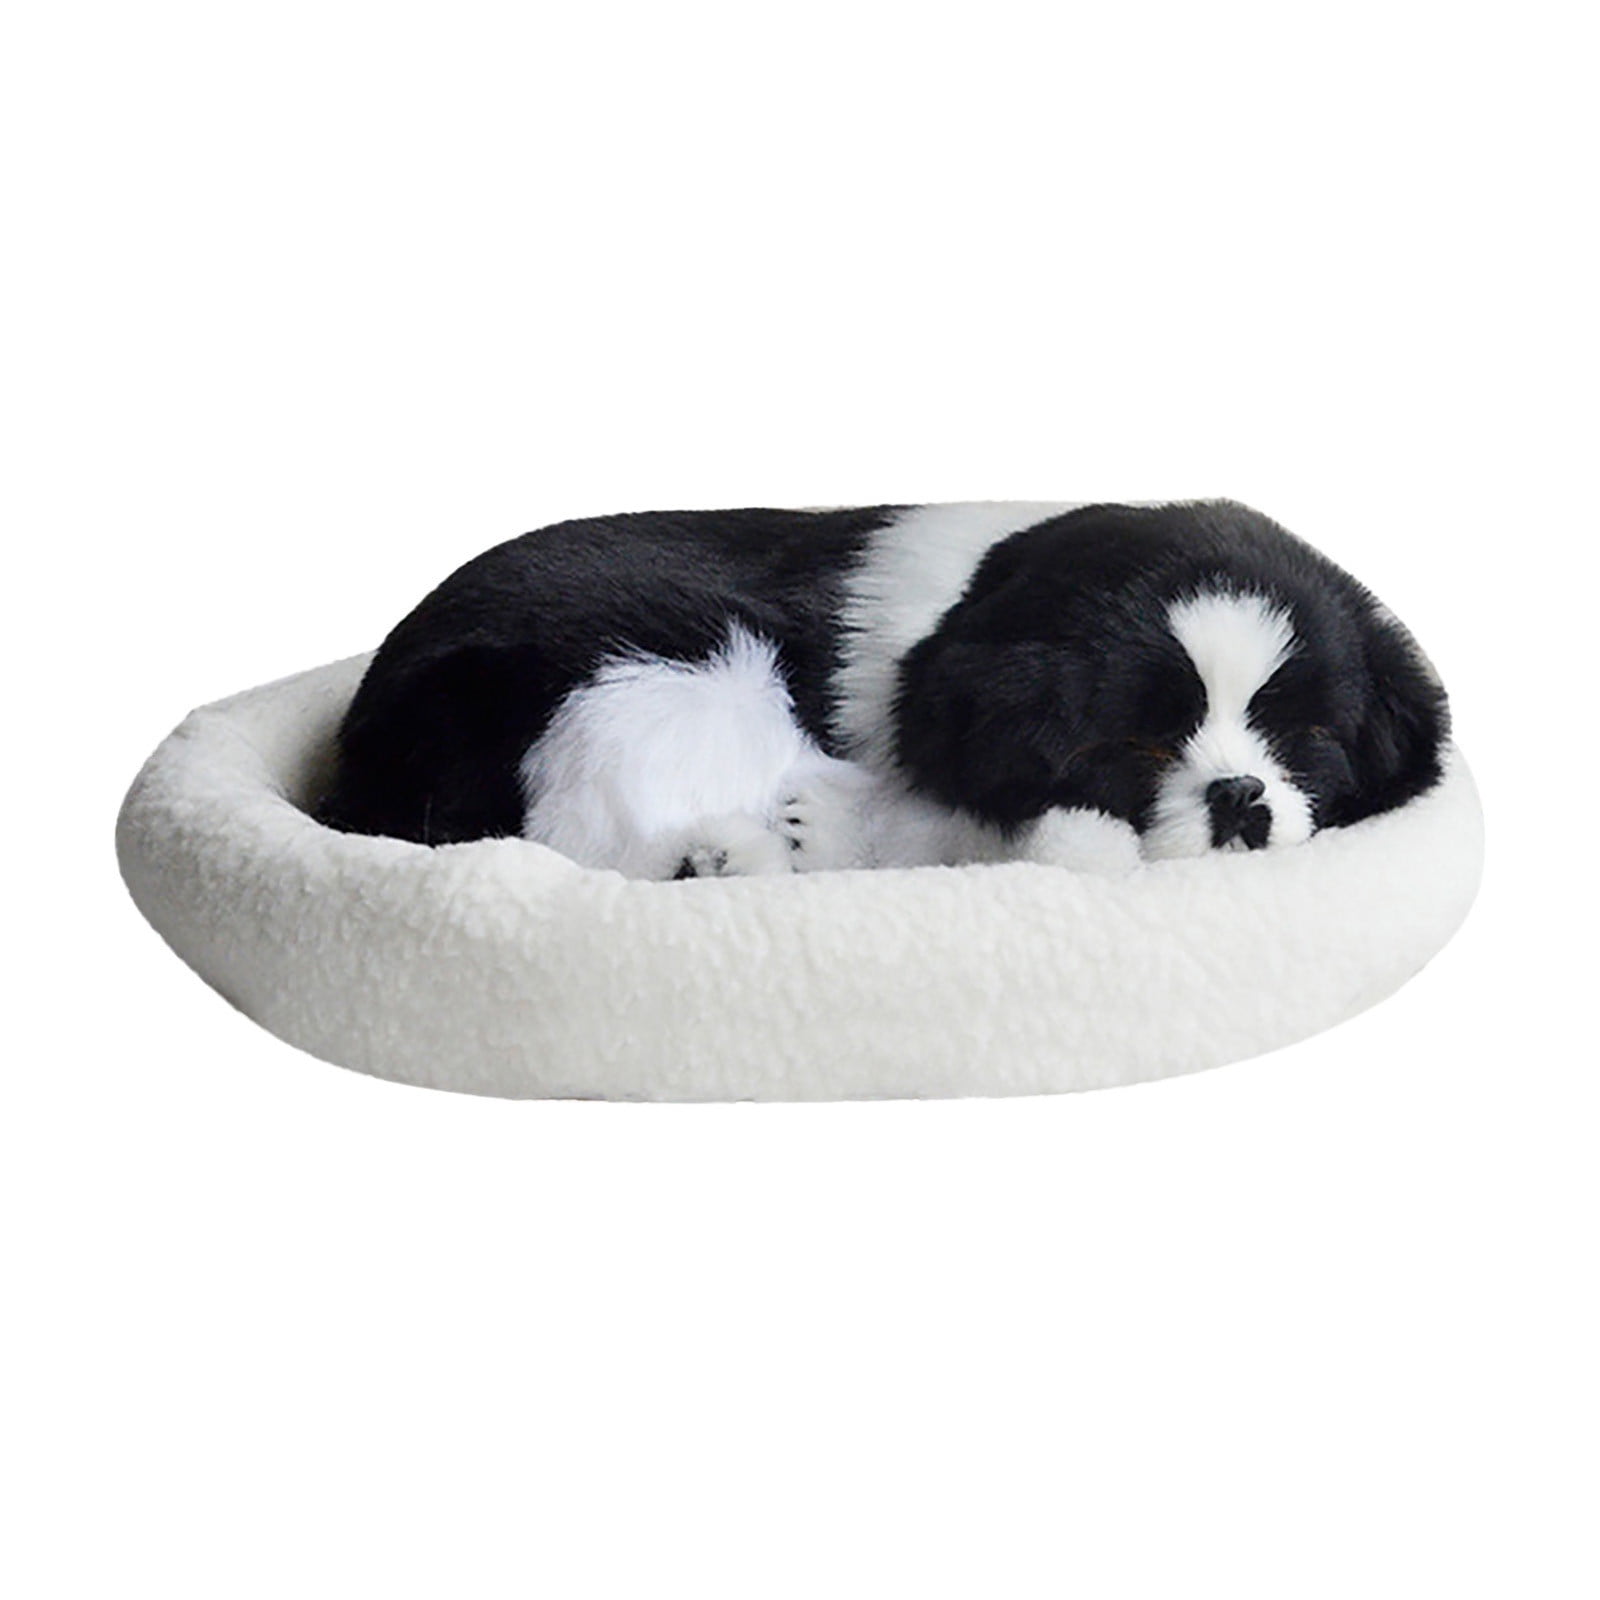 Cute Sleeping Plush Dog Puppy on Mat Stuffed Puppy Animals Toy Decor